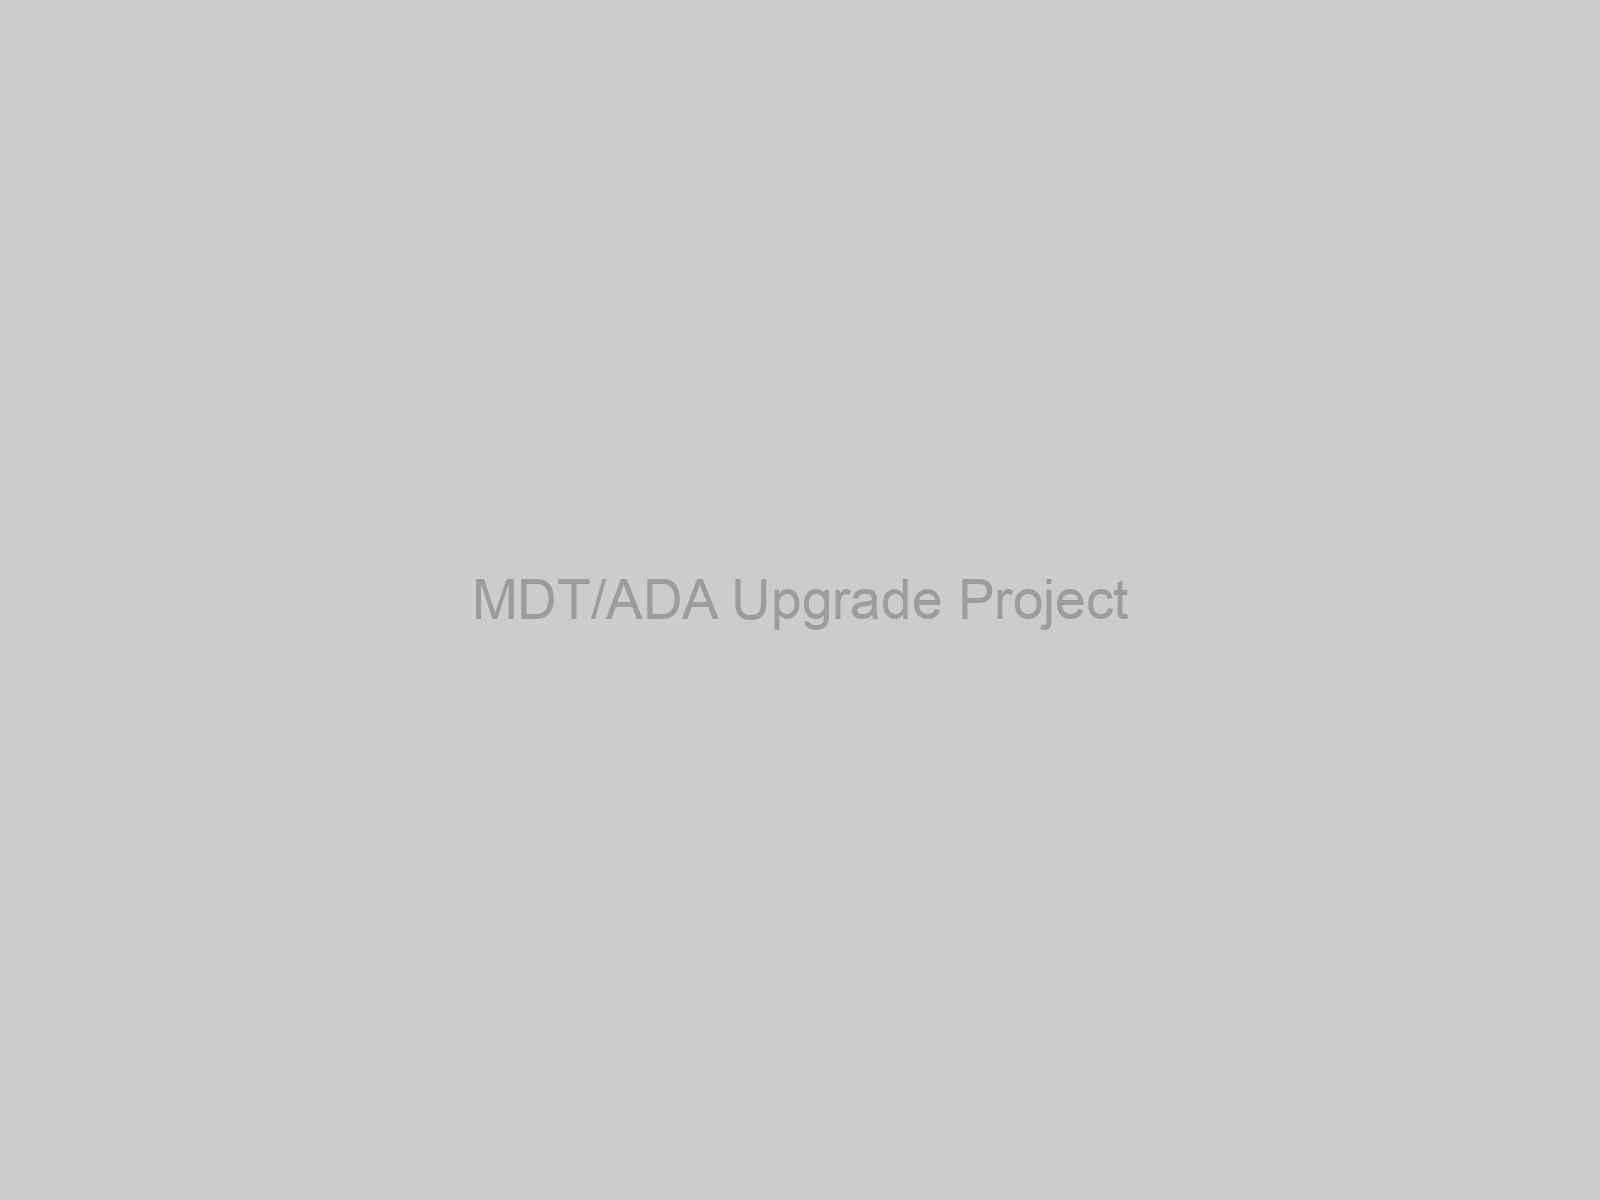 MDT/ADA Upgrade Project